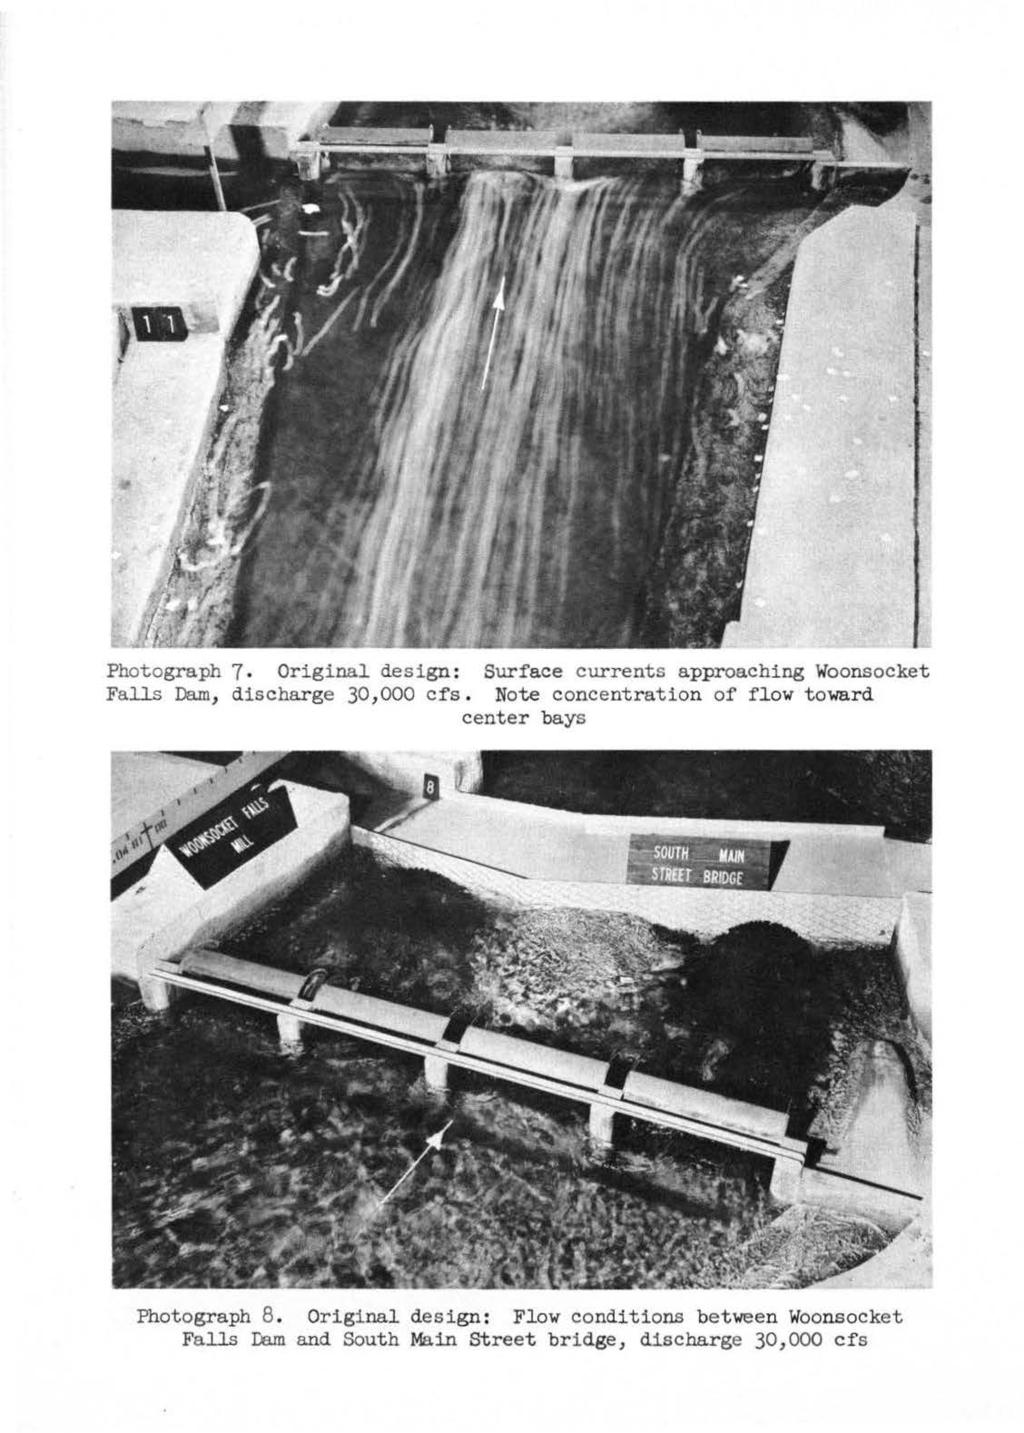 Photograph 7 Original design: Surface currents approaching Woonsocket Falls Dam, discharge 30,000 cfs.